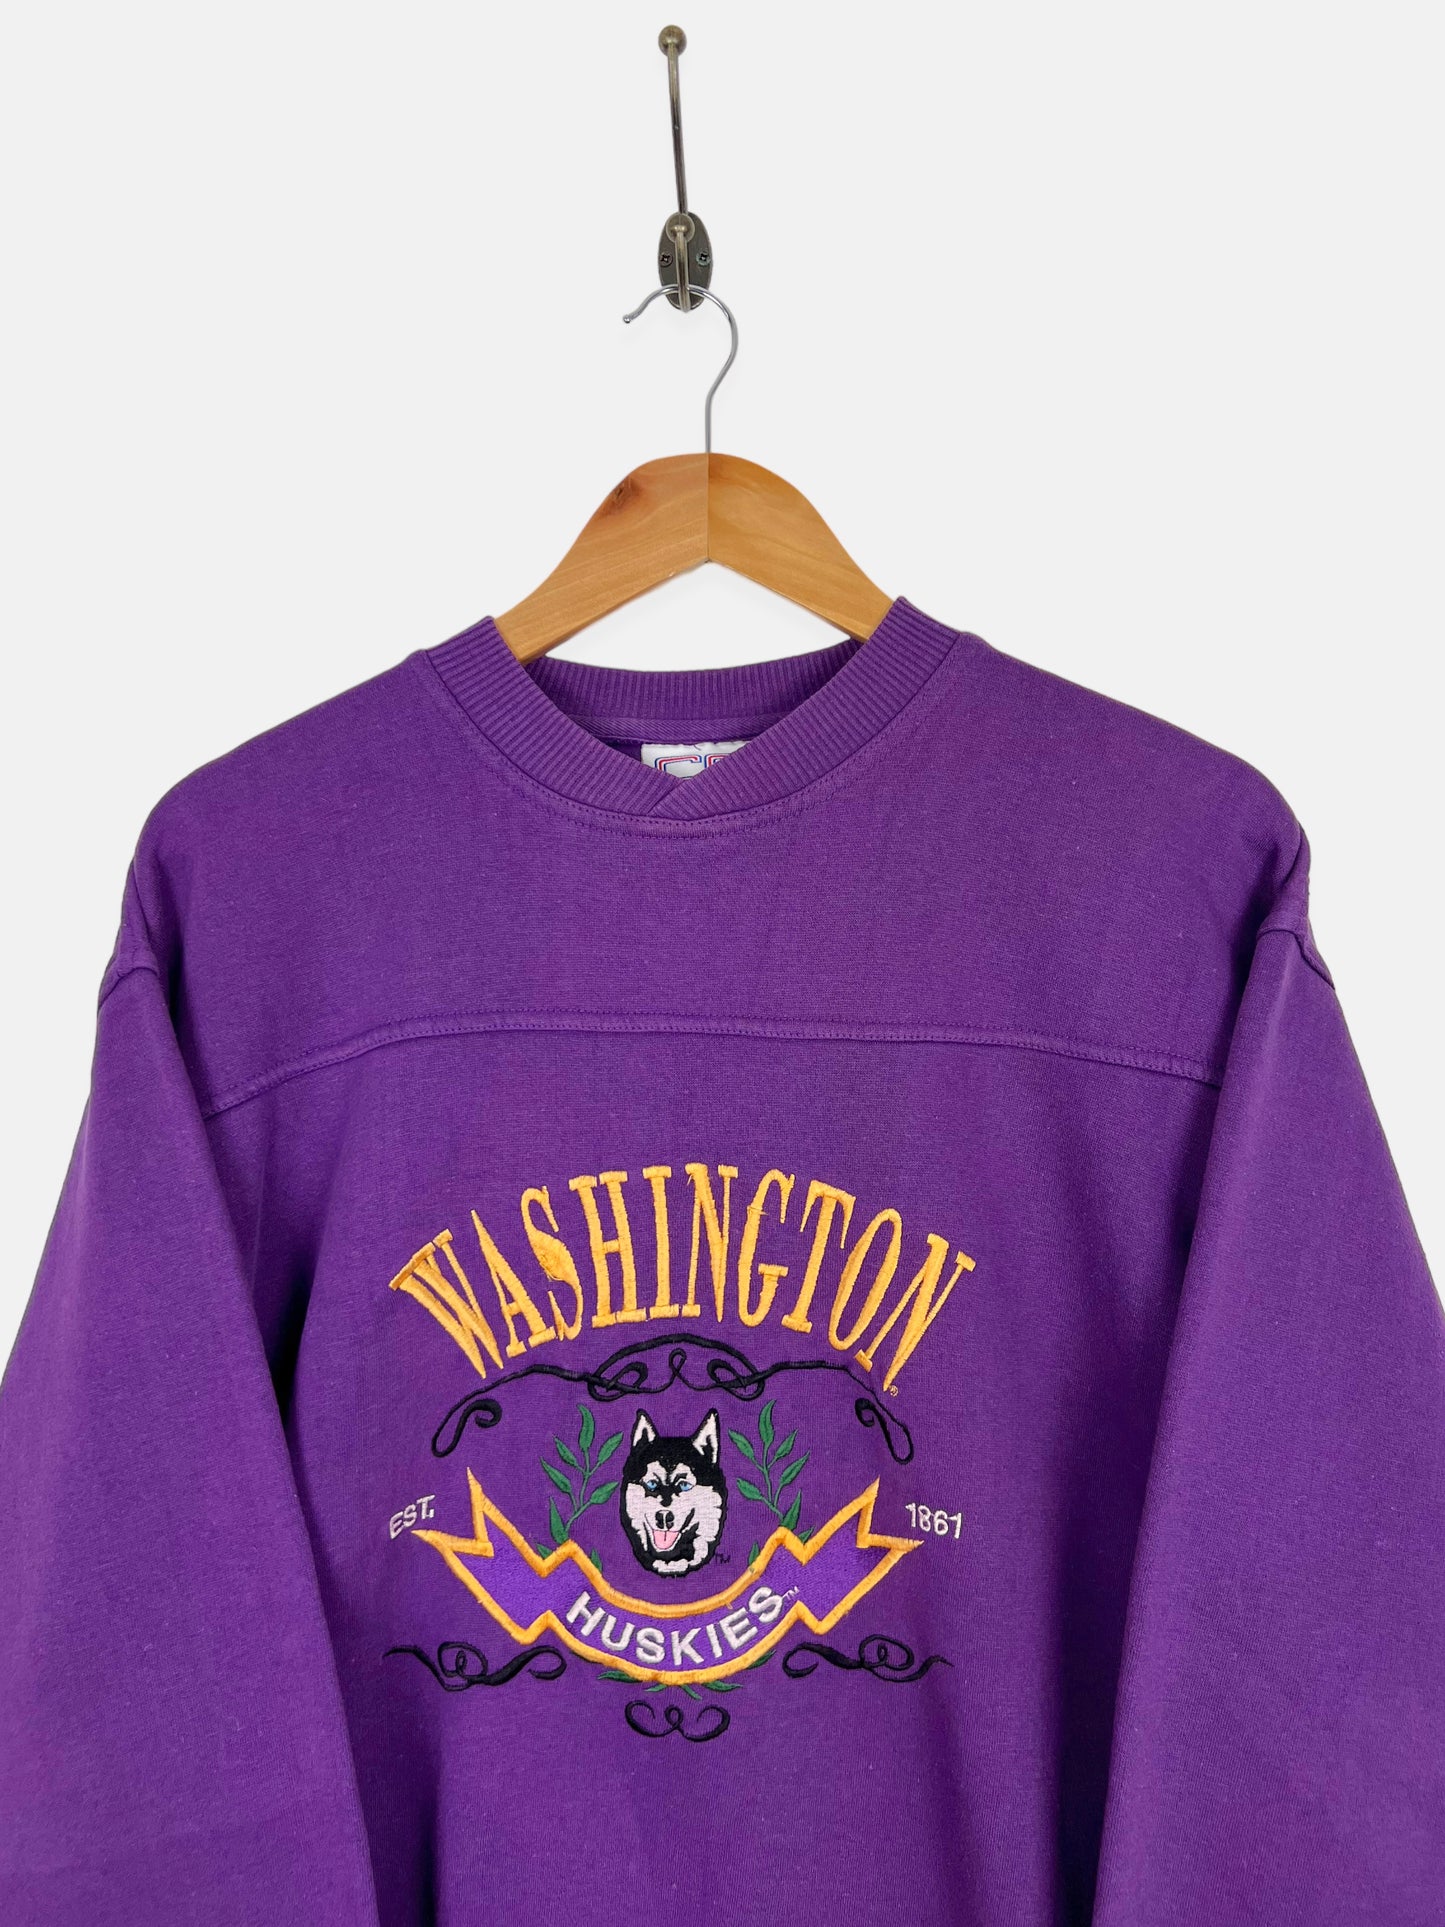 90's Washington Huskies Embroidered Vintage Sweatshirt Size 12